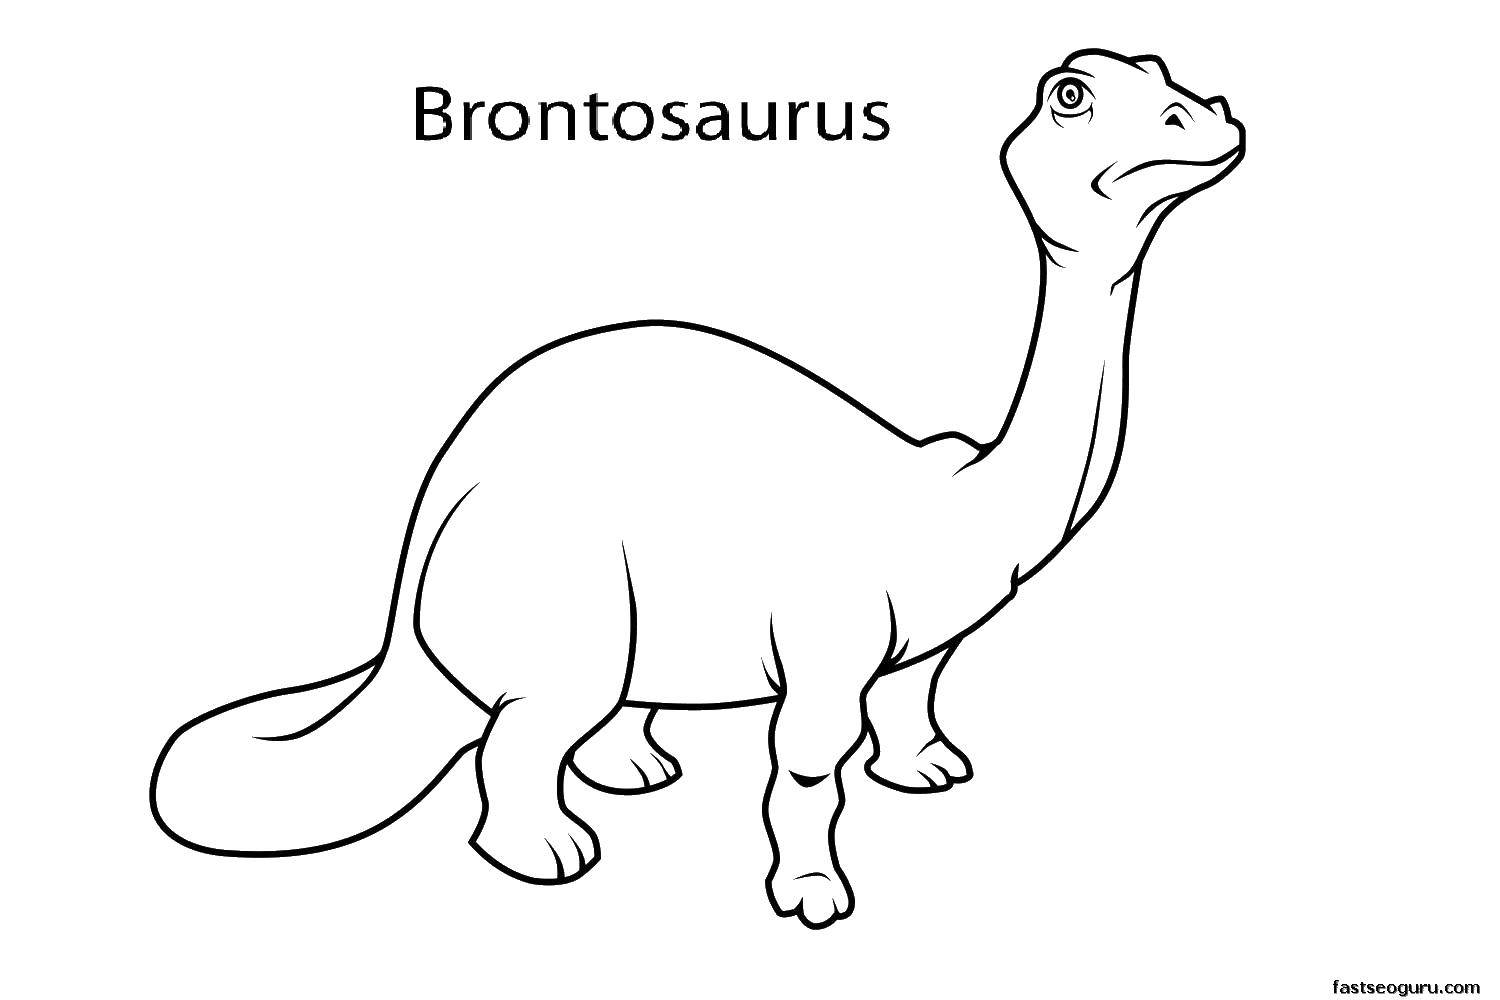 Coloring Brontosaurus. Category Jurassic Park. Tags:  Dinosaurs, Brontosaurus.